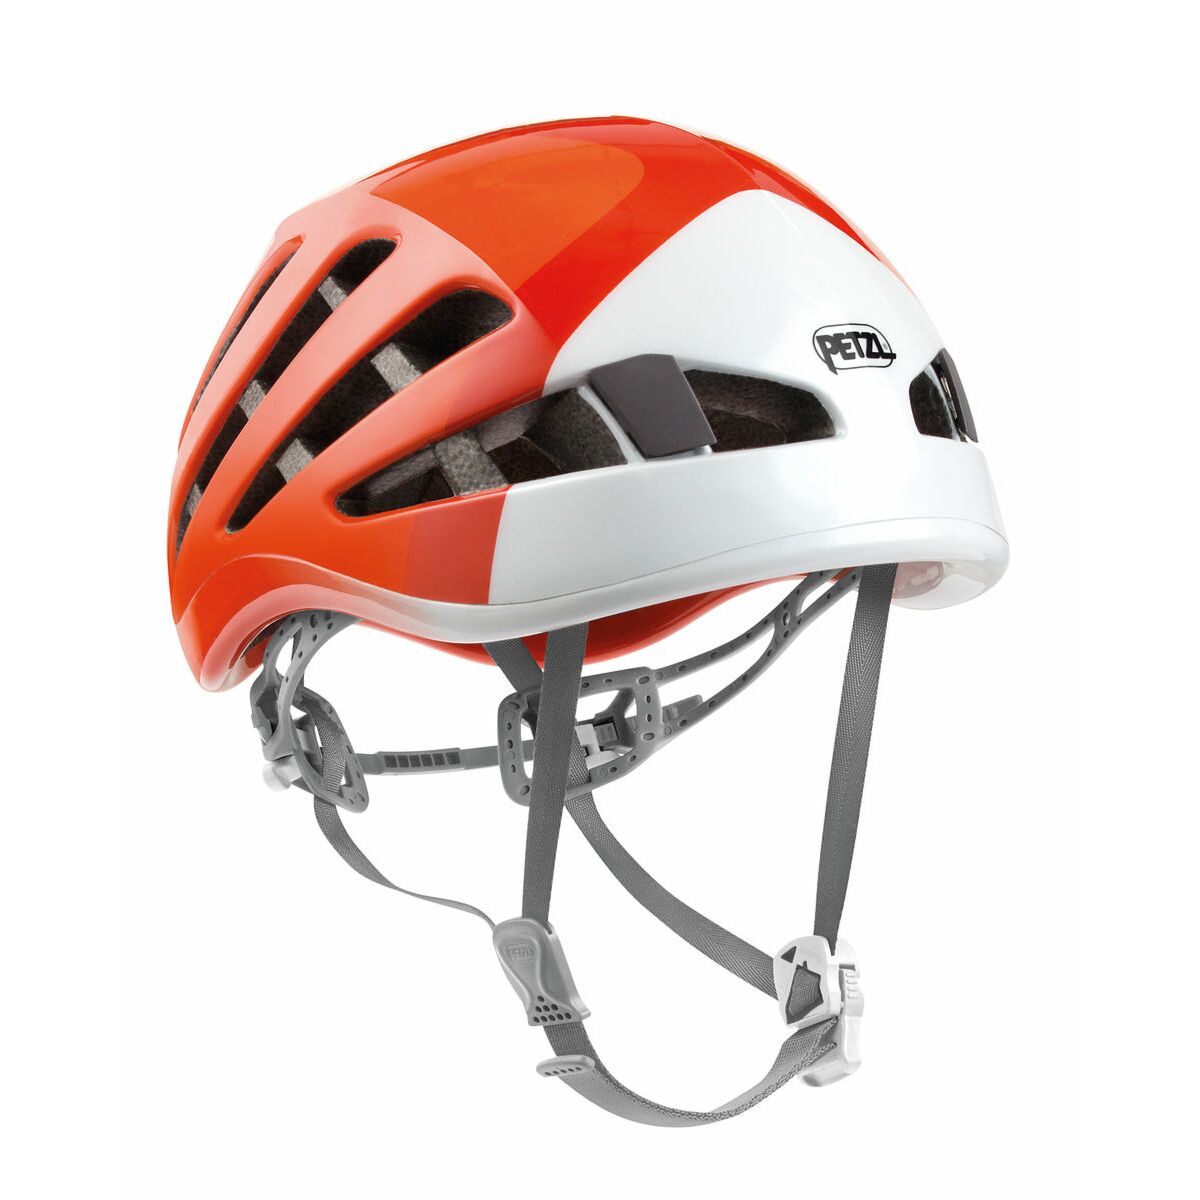 Petzl Meteor coasteering helmet